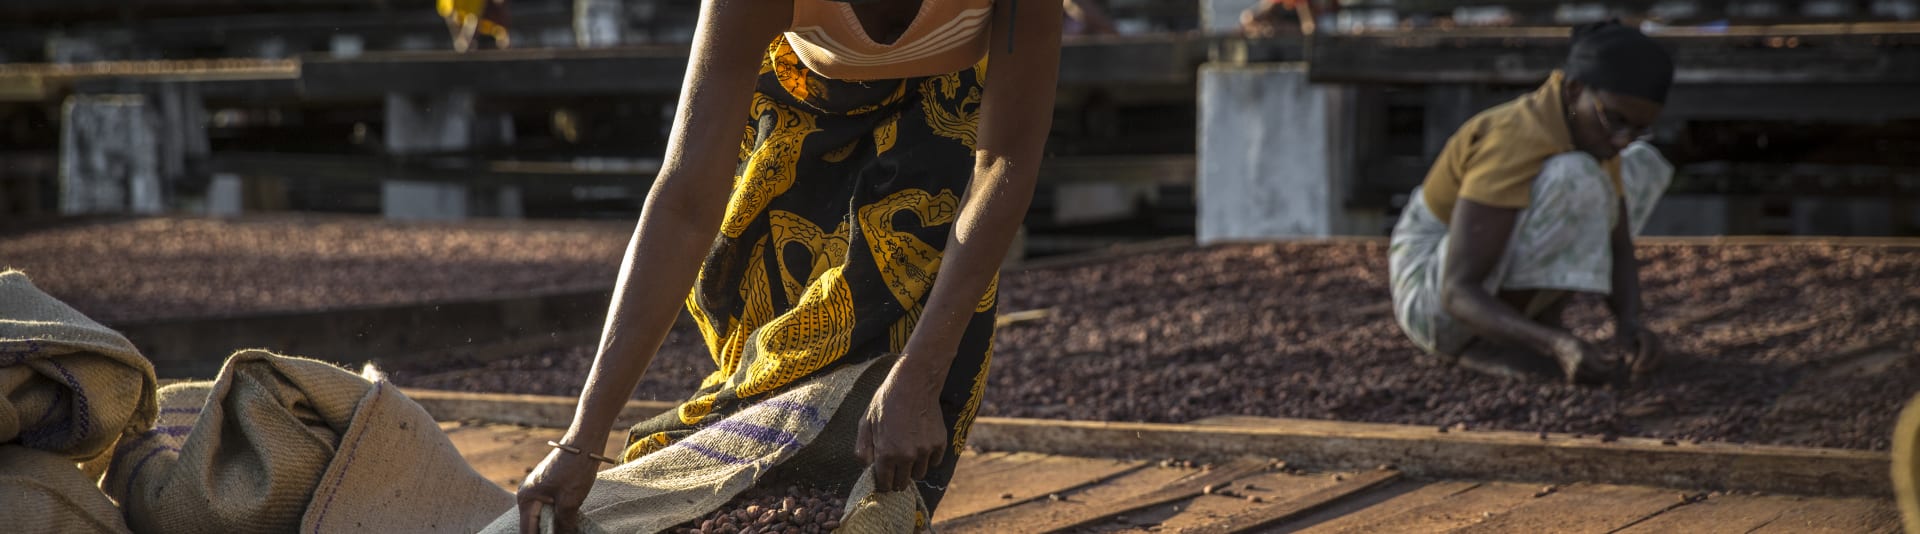 Valrhona's cocoa producer in Madagascar